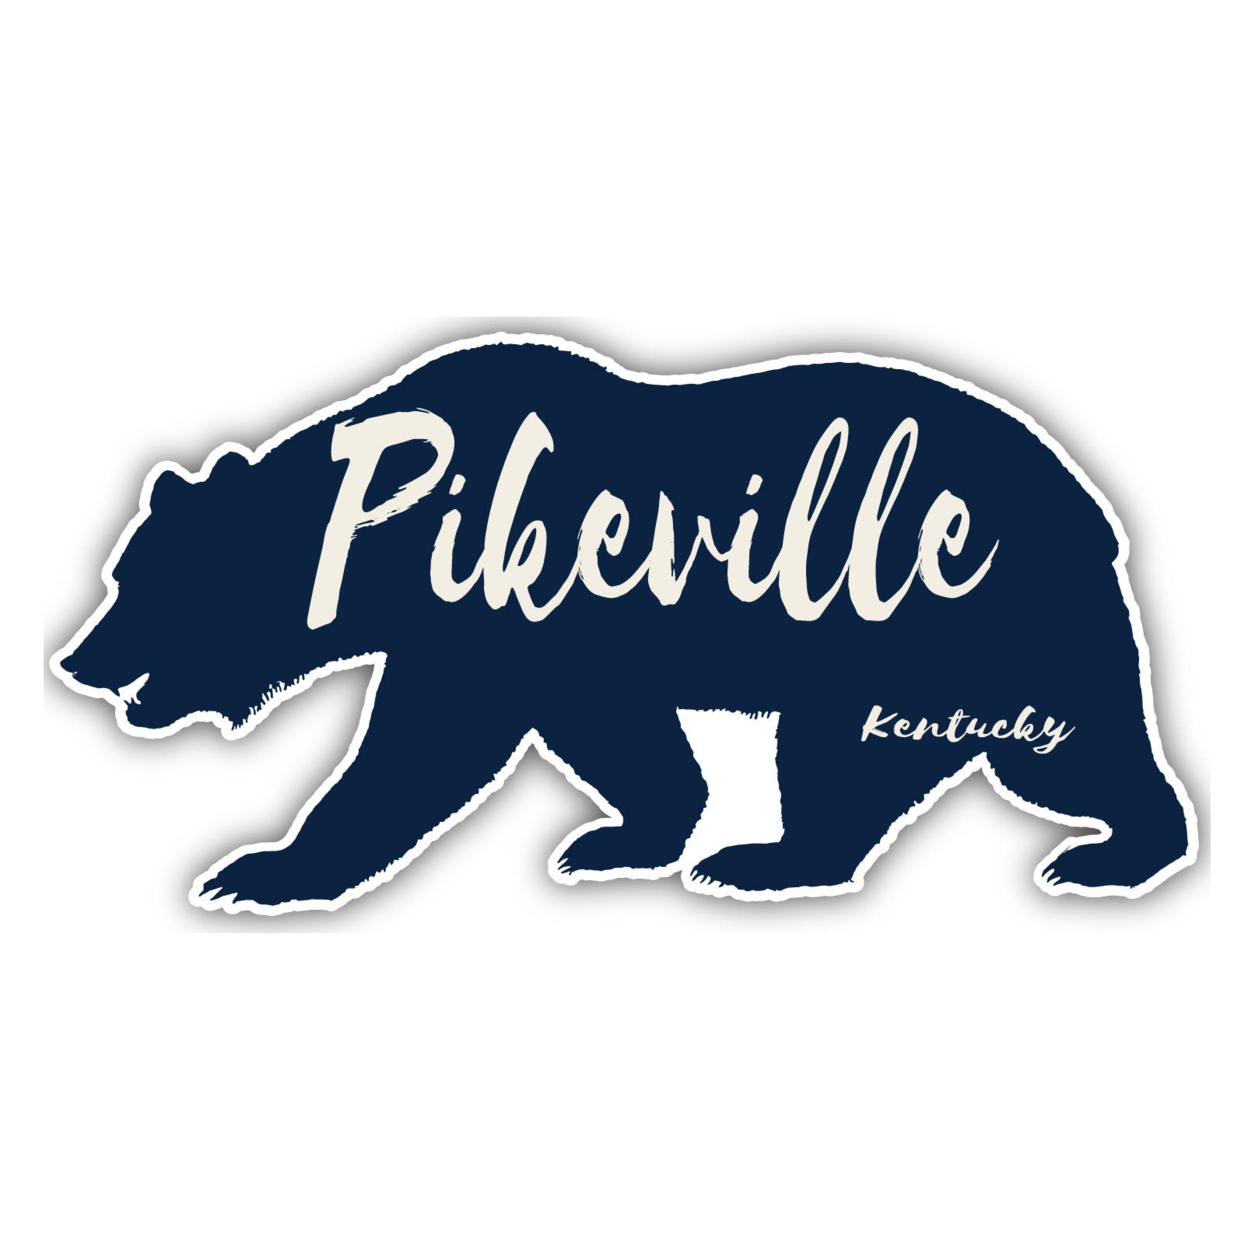 Pikeville Kentucky Souvenir Decorative Stickers (Choose Theme And Size) - Single Unit, 2-Inch, Adventures Awaits